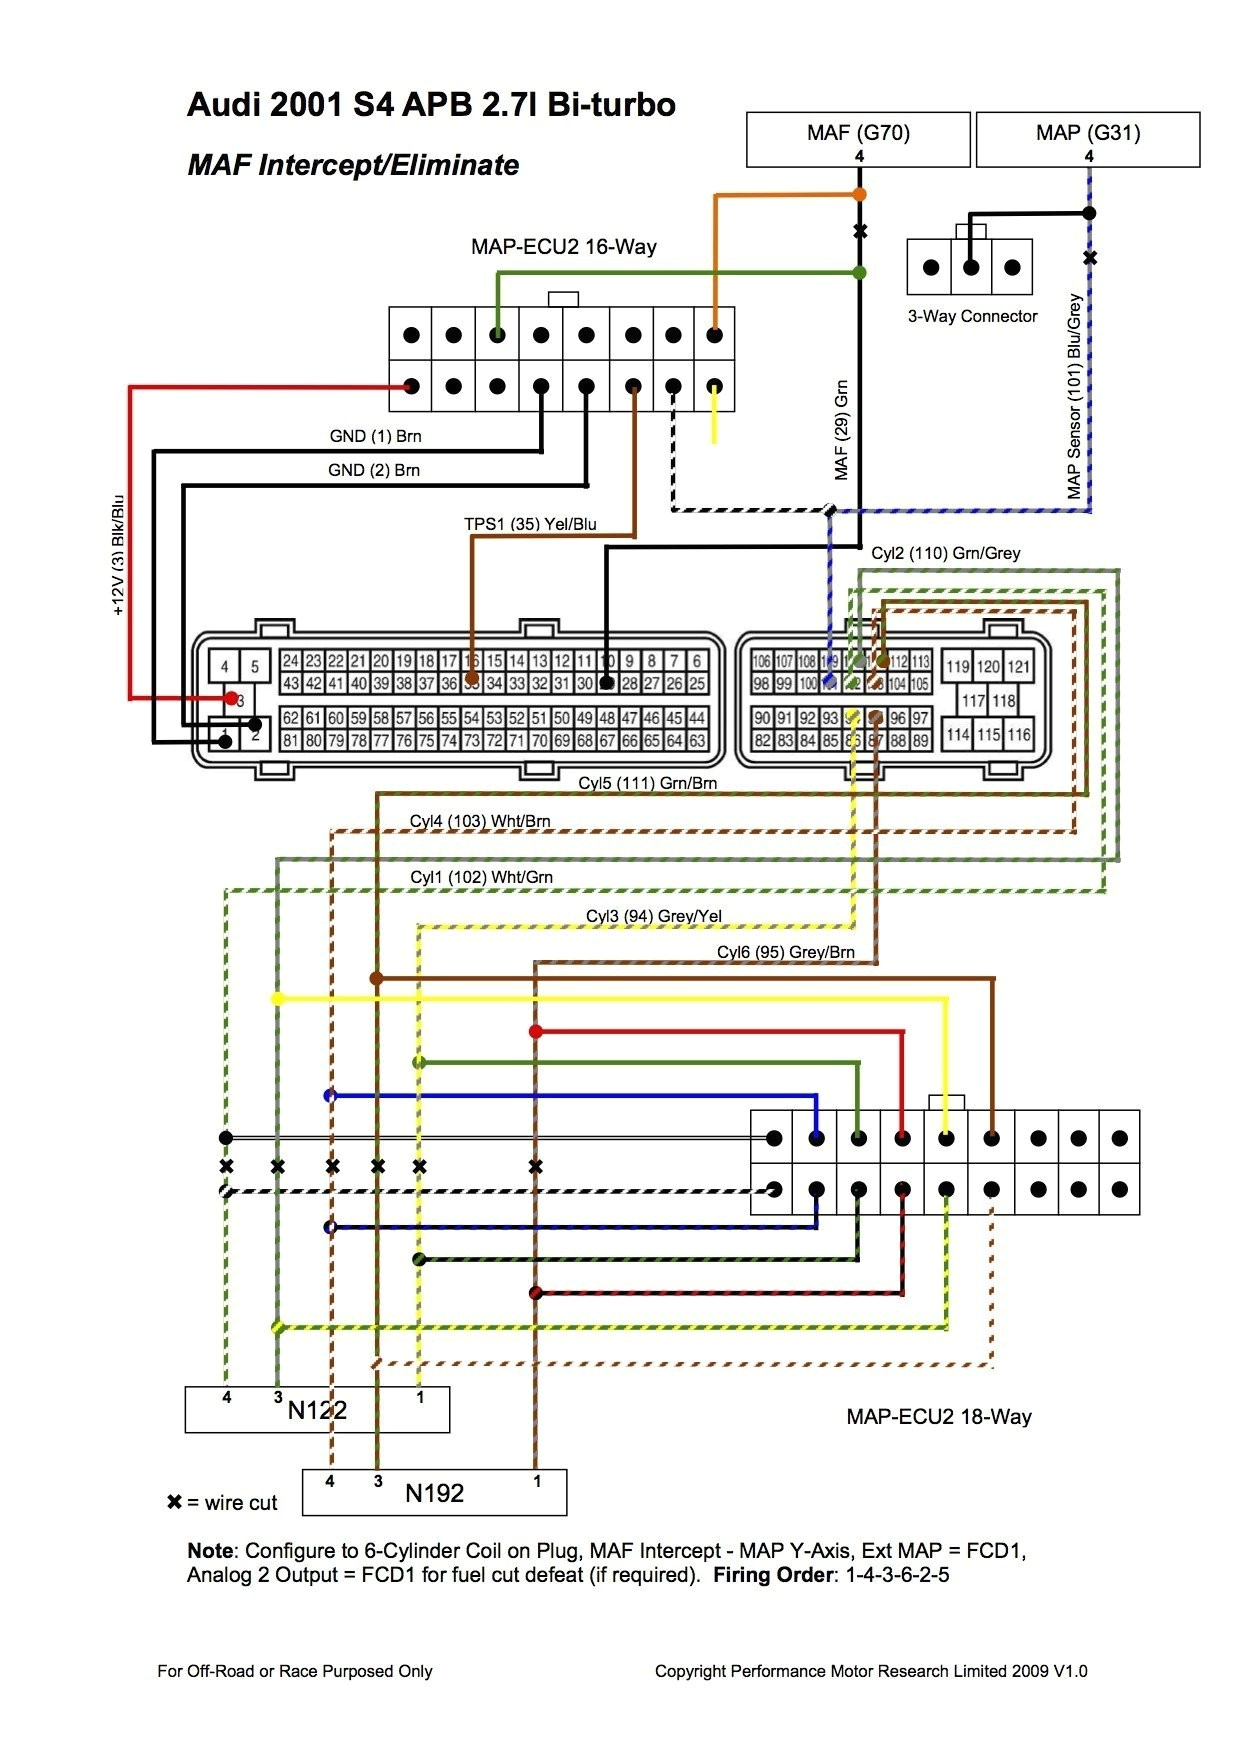 wiring diagram 2000 audi s4 wiring diagrams favorites 1994 audi s4 wiring diagram